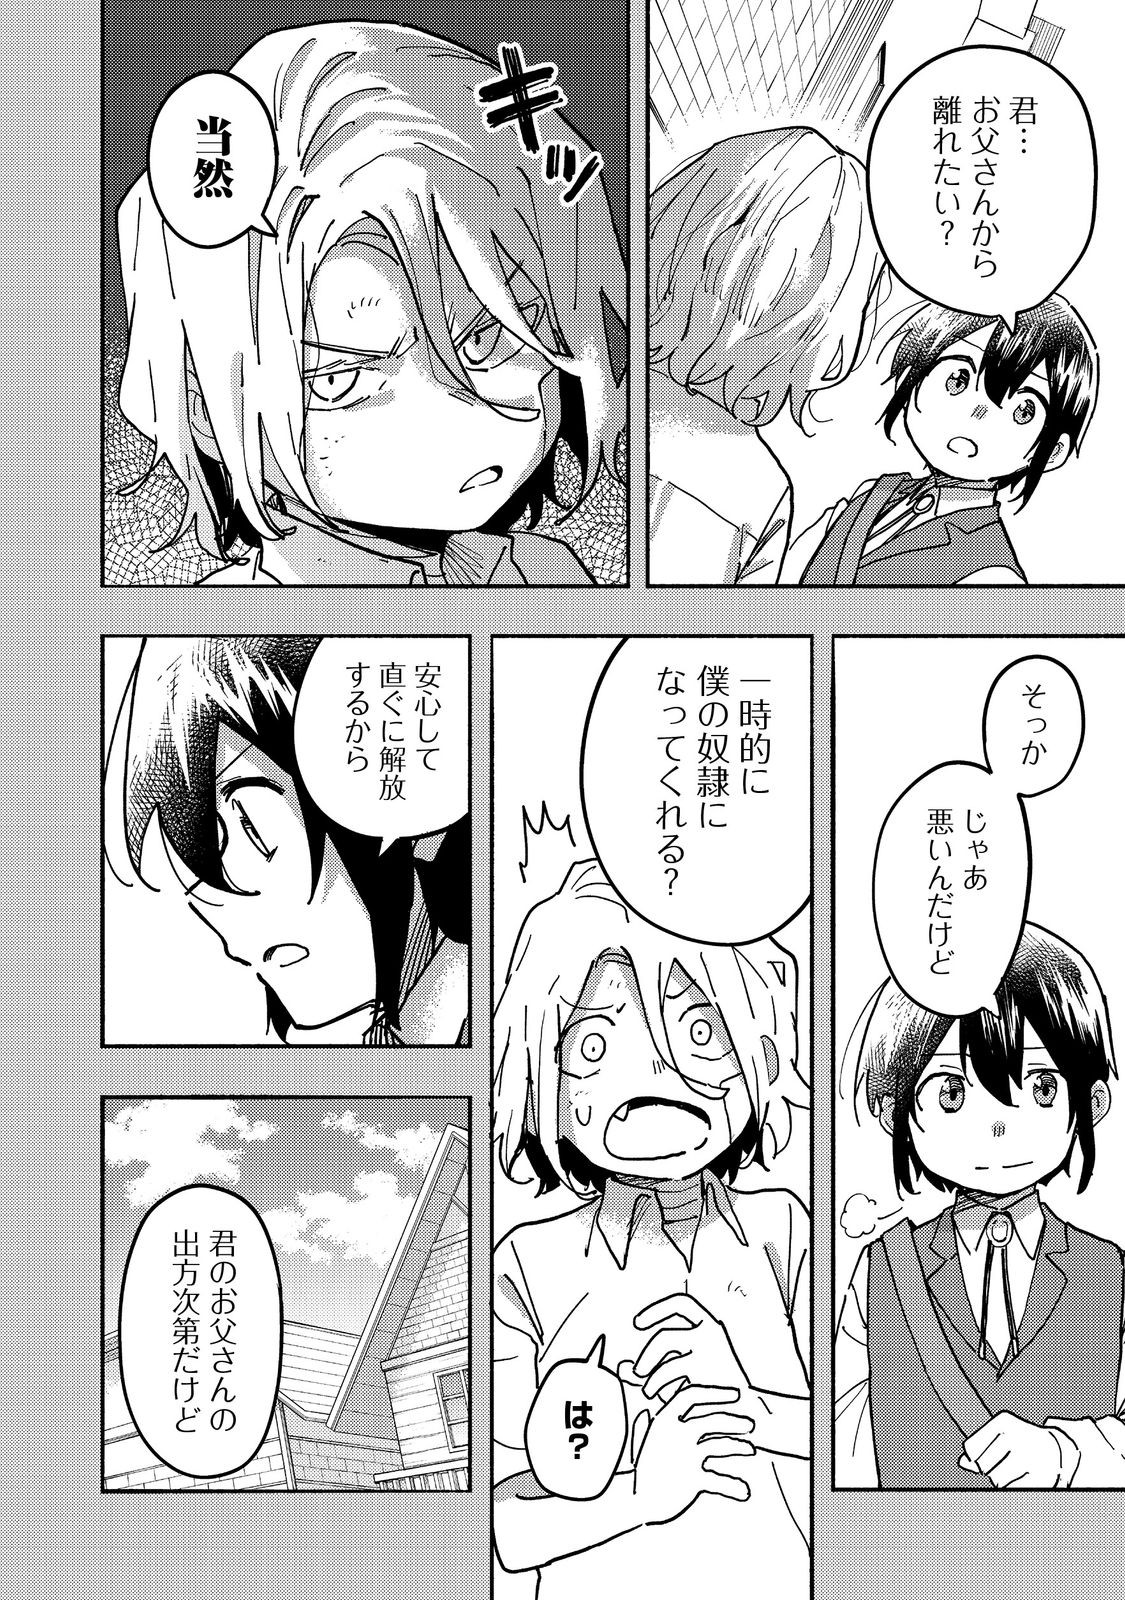 Kyou mo E ni Kaita Mochi ga Umai - Chapter 26 - Page 2